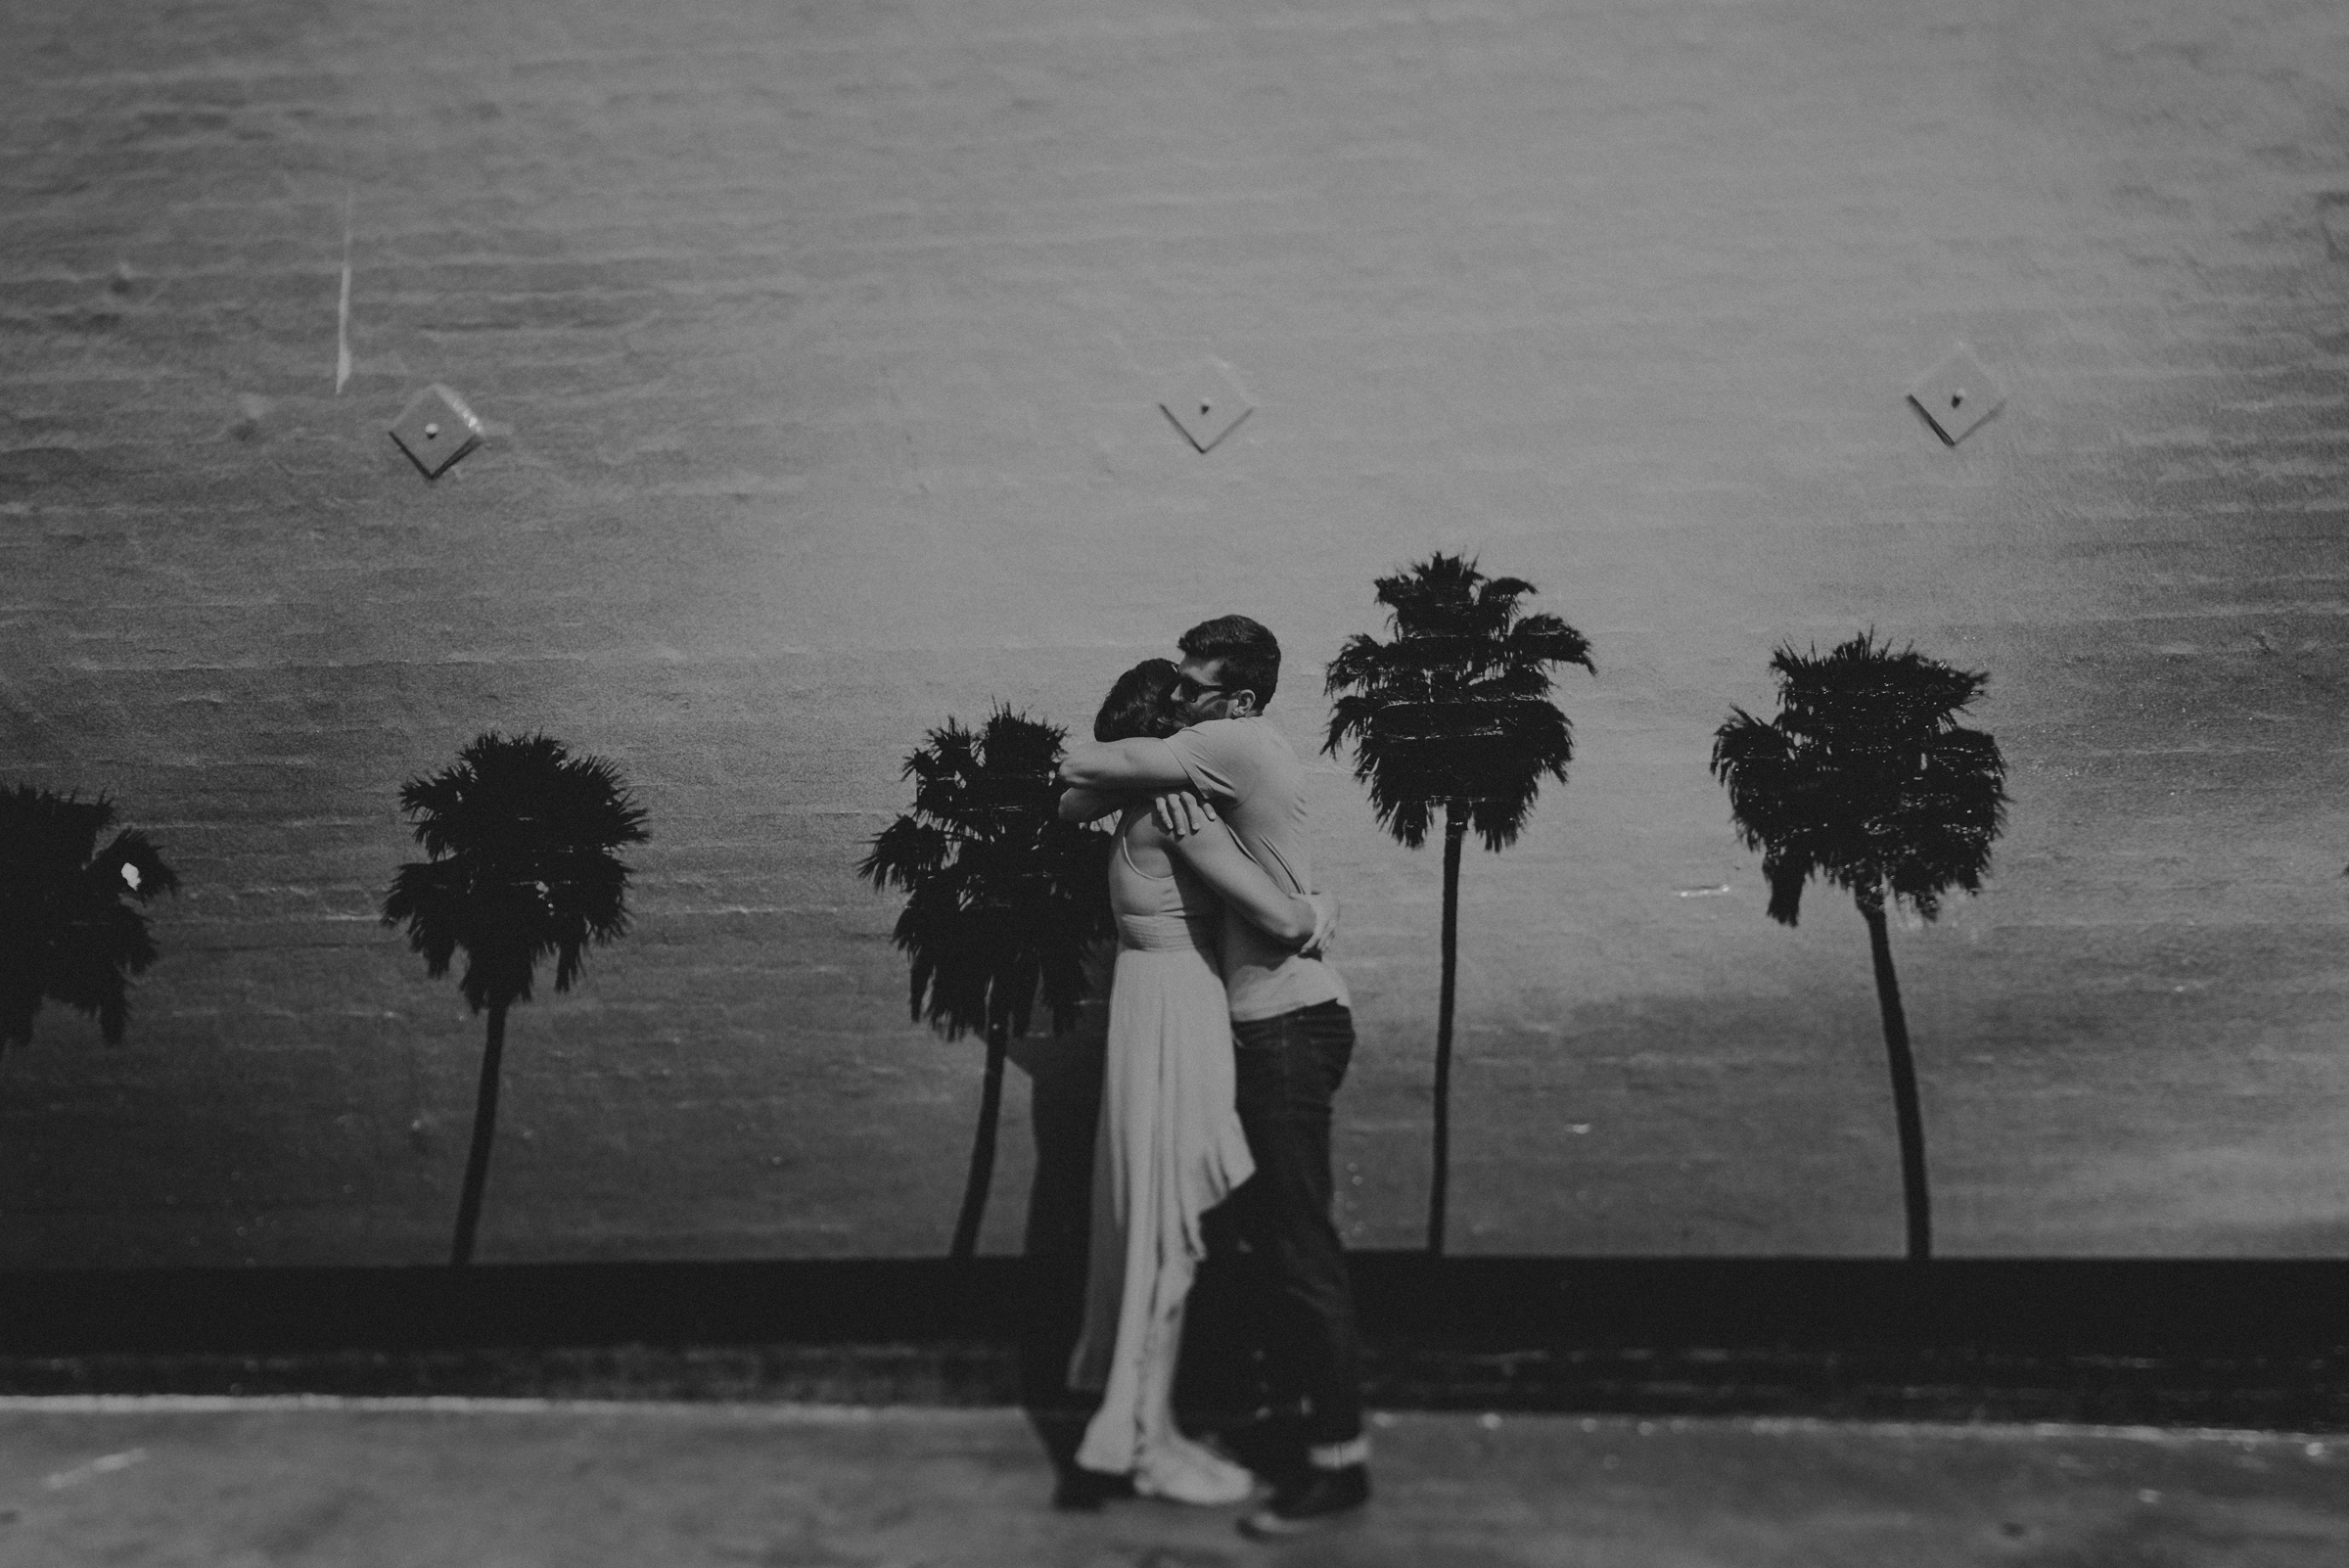 Isaiah + Taylor Photography - Venice Beach & Santa Monica Engagement Session, Los Angeles Wedding Photographer-030.jpg